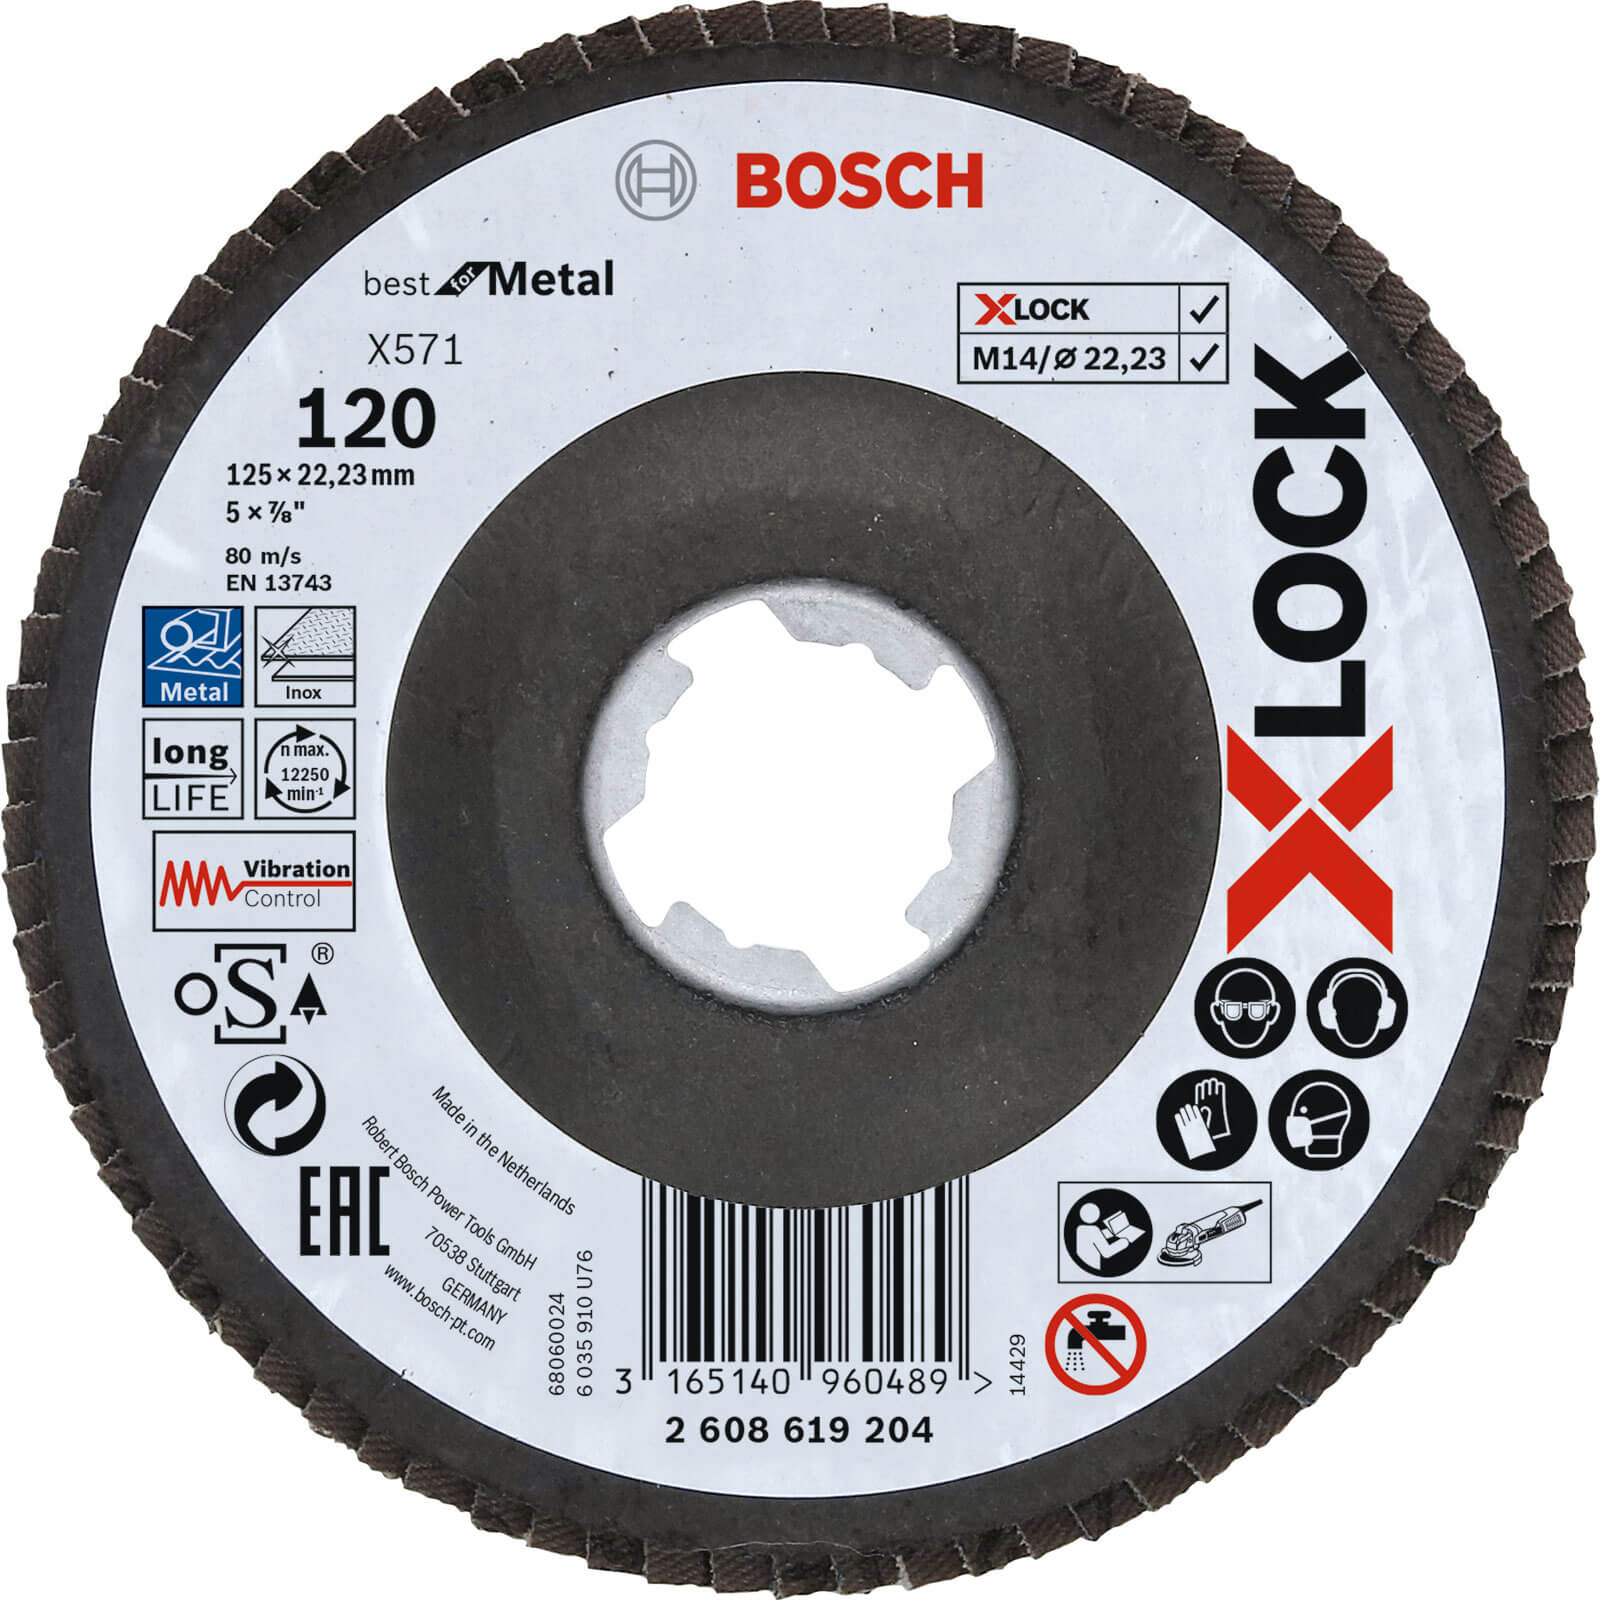 Photos - Cutting Disc Bosch X Lock Zirconium Abrasive Flap Disc 125mm 120g Pack of 1 2608619204 